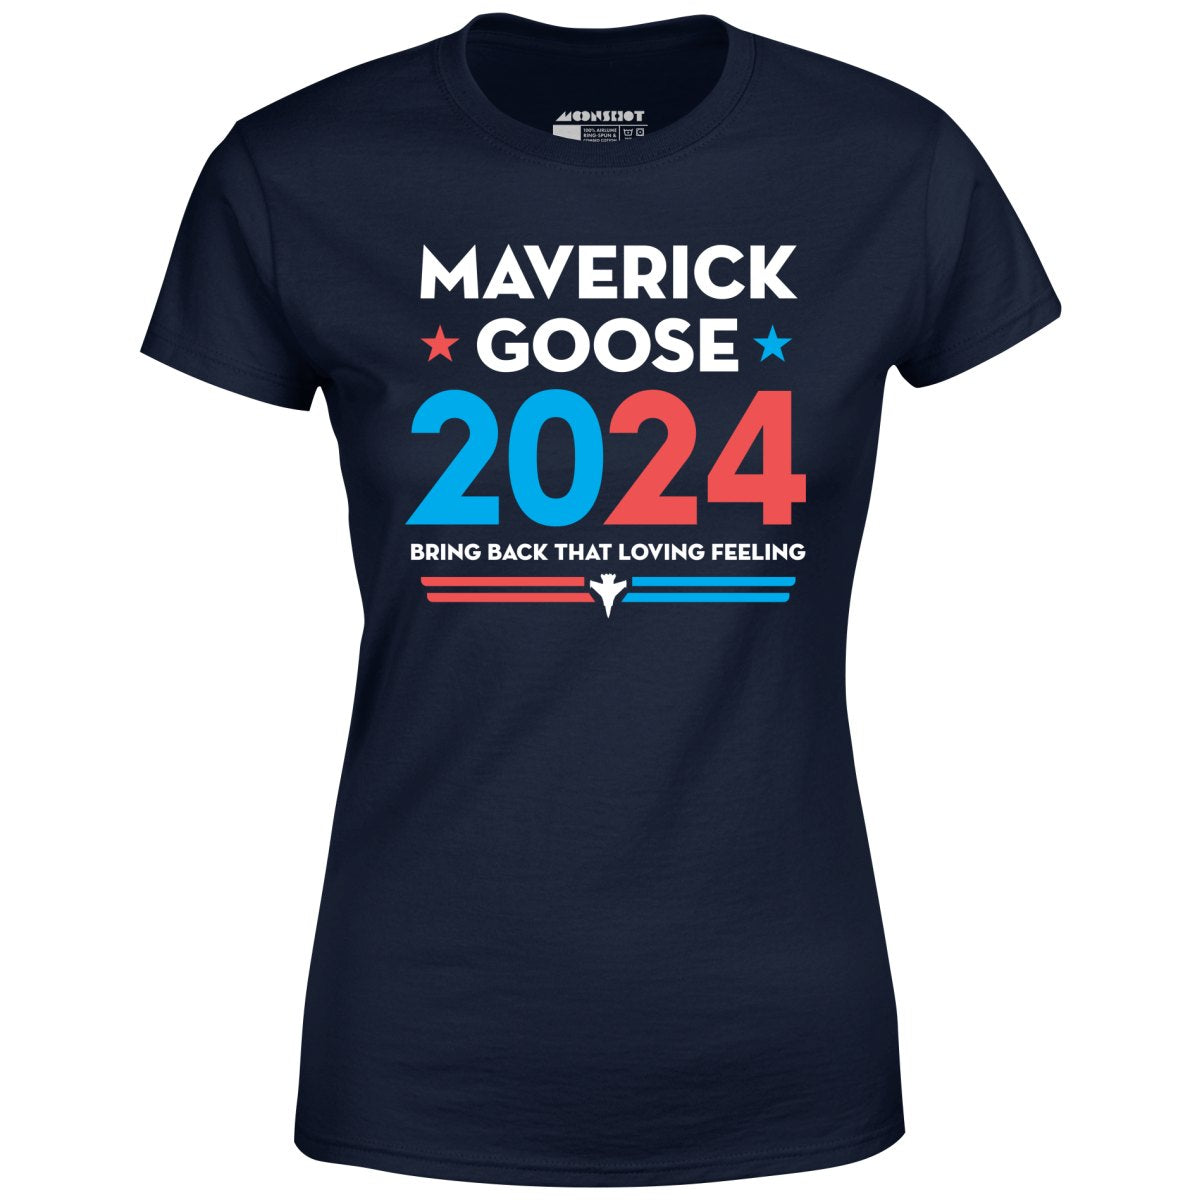 Maverick Goose 2024 - Women's T-Shirt